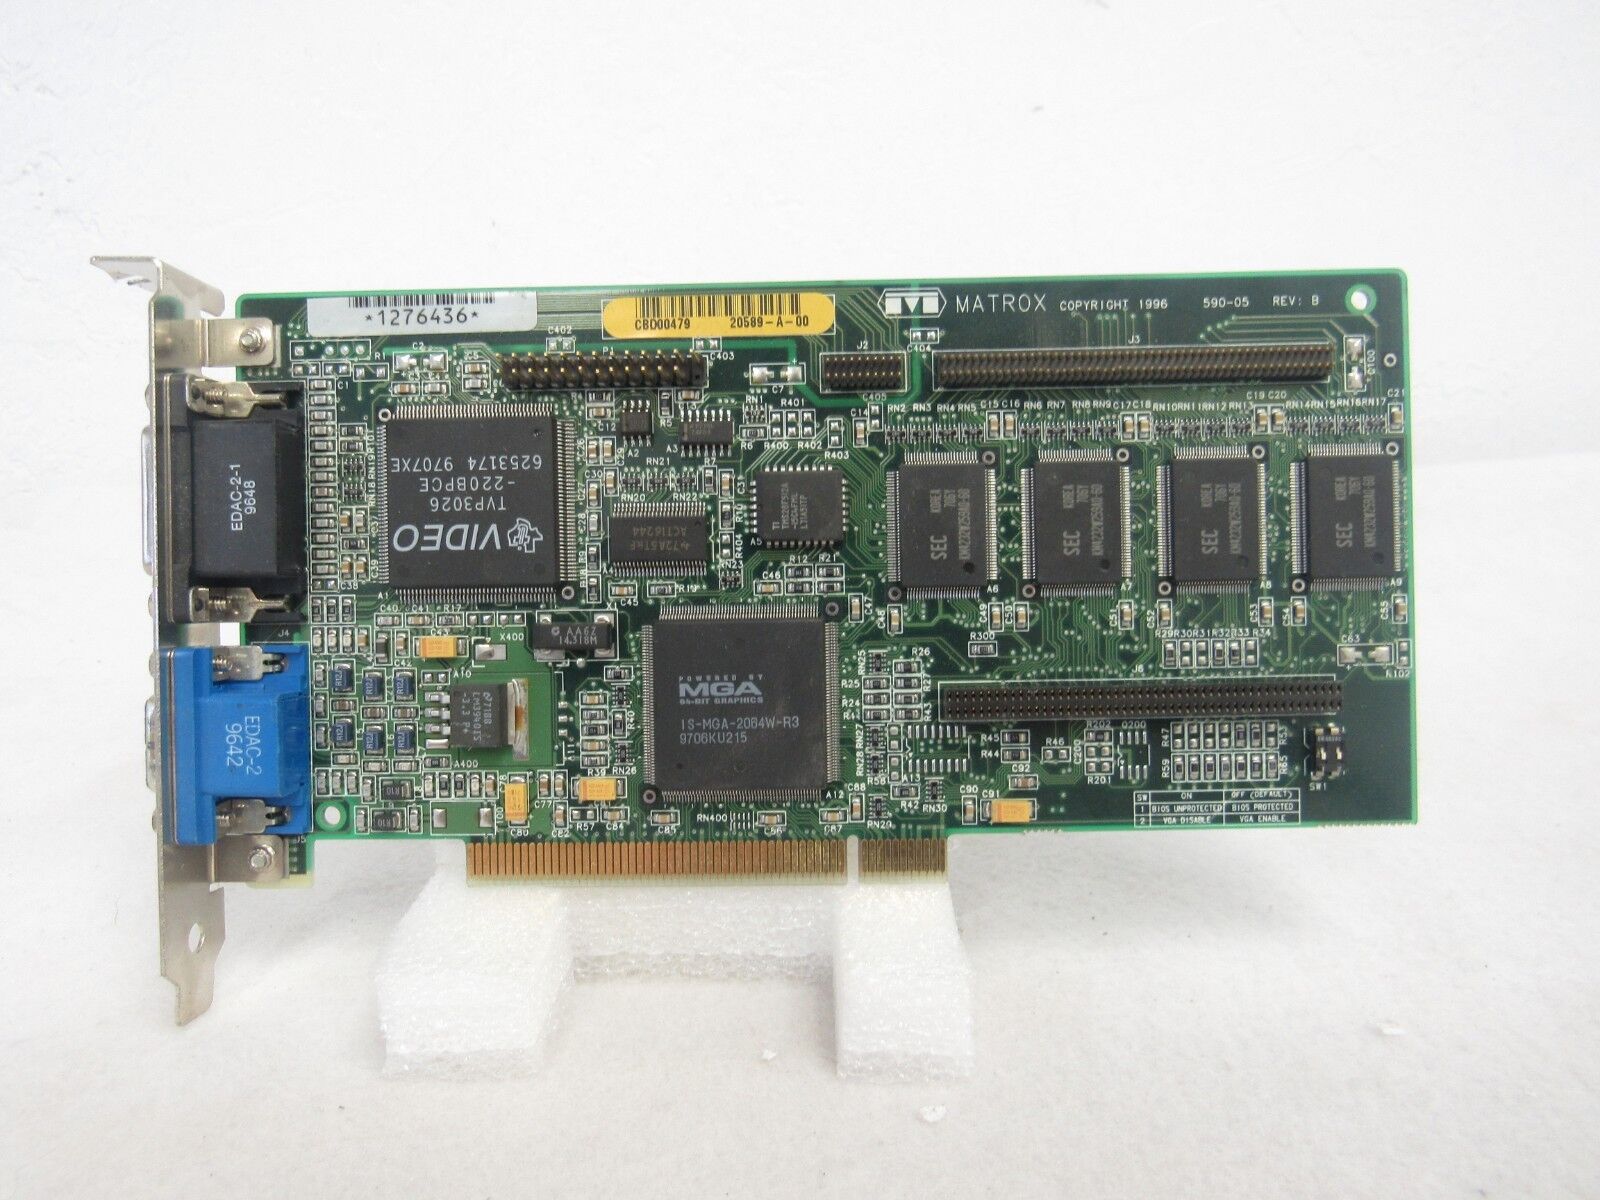 Dell 59264 00059264 Matrox 590-05 Rev.B 4MB PCI Graphics Card 23-4